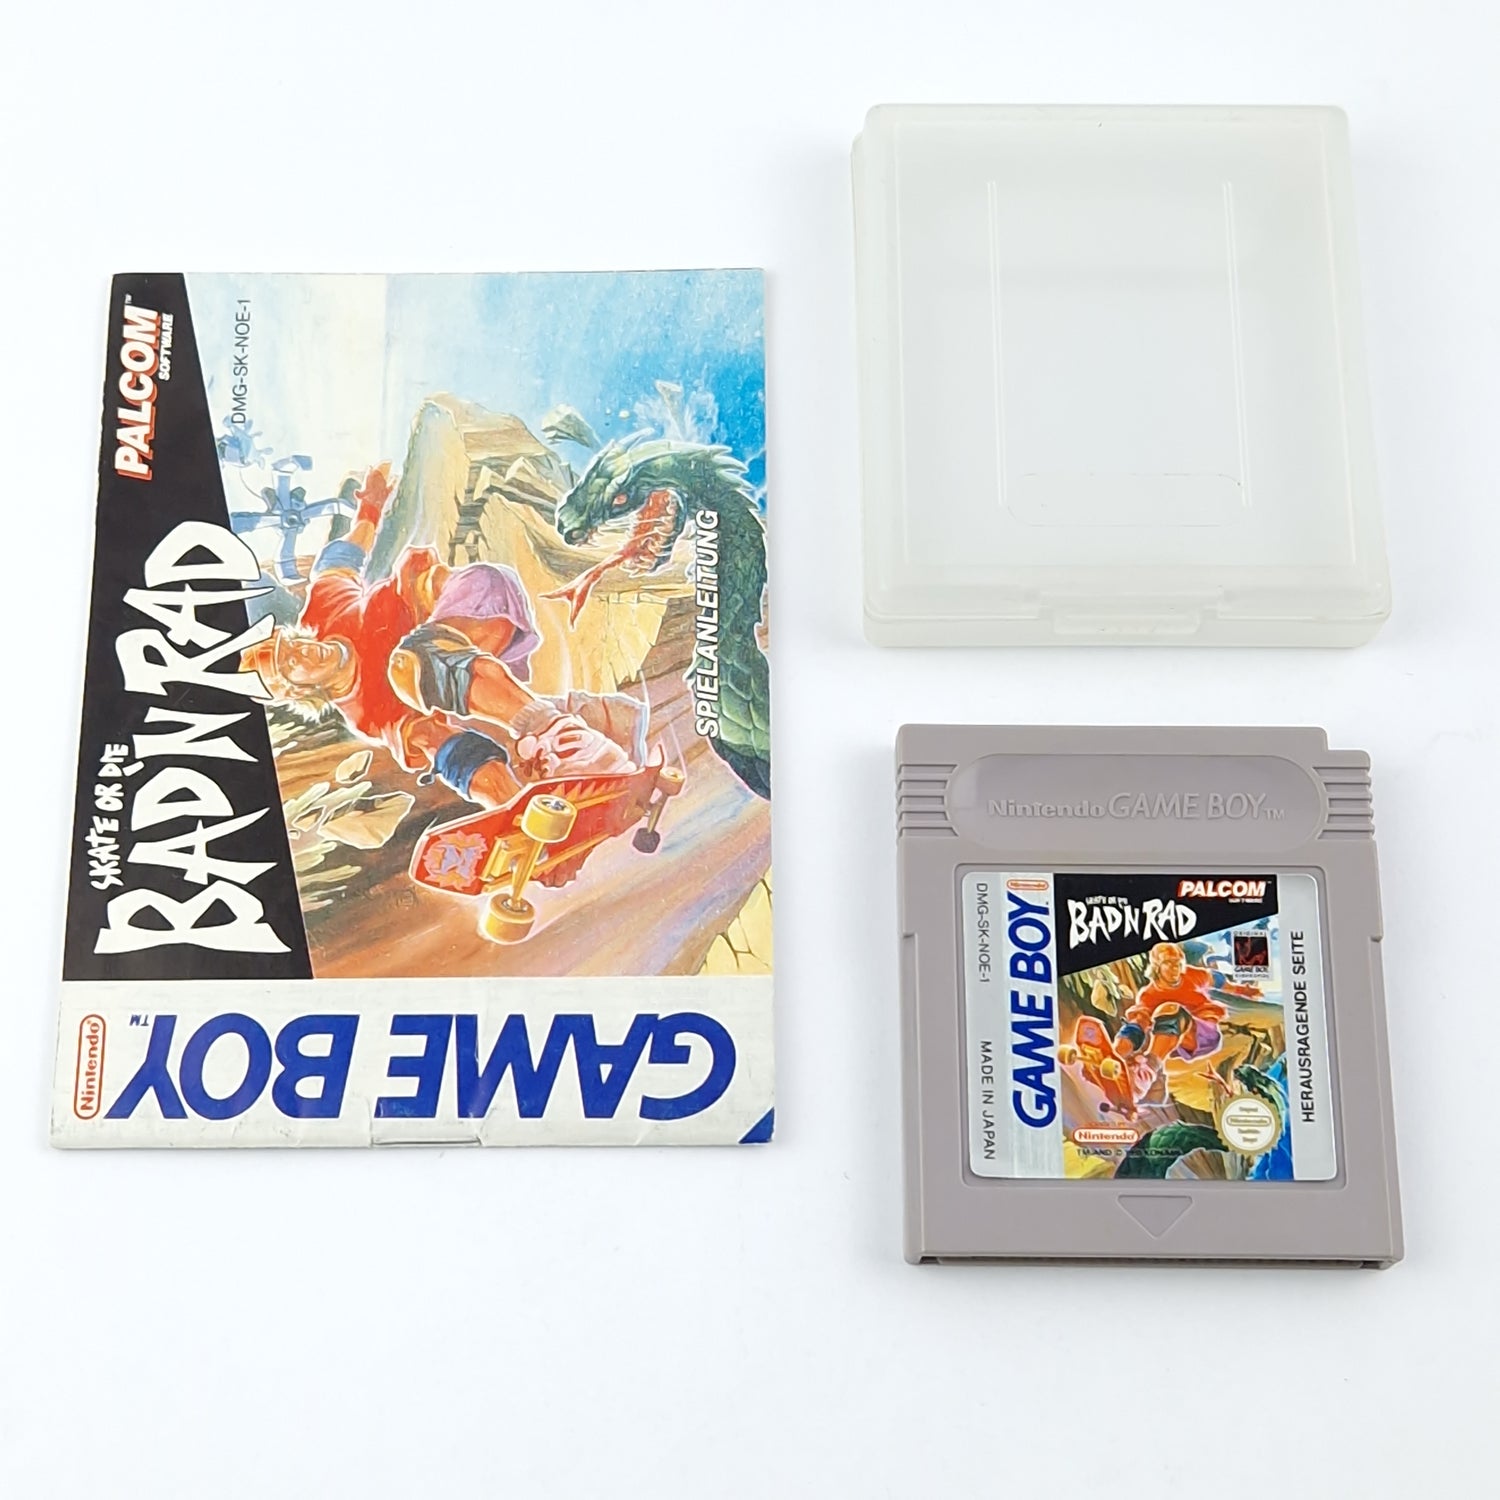 Nintendo Game Boy Classic Game: Bad N Rad + Instructions - Module Cartridge NOE-1